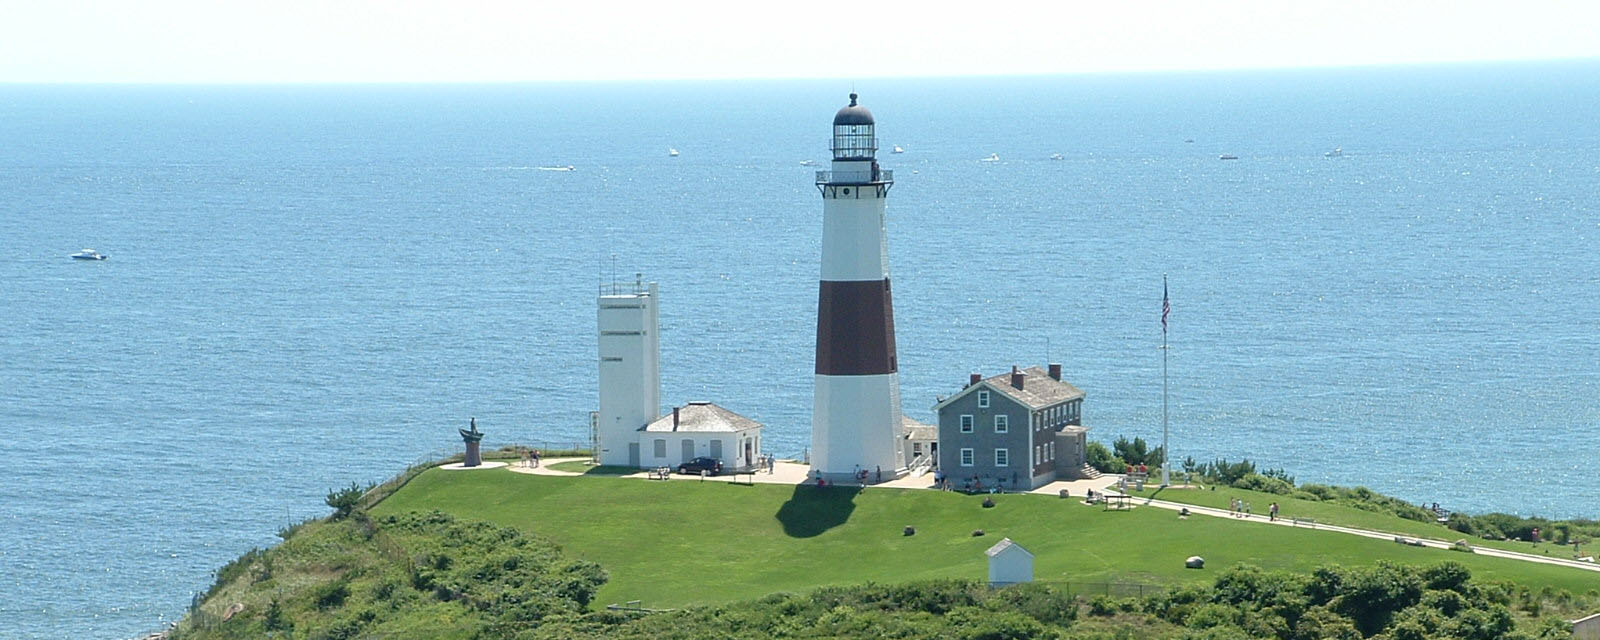 License: https://commons.wikimedia.org/wiki/File:Montauk_Point_Lighthouse_2008.jpeg